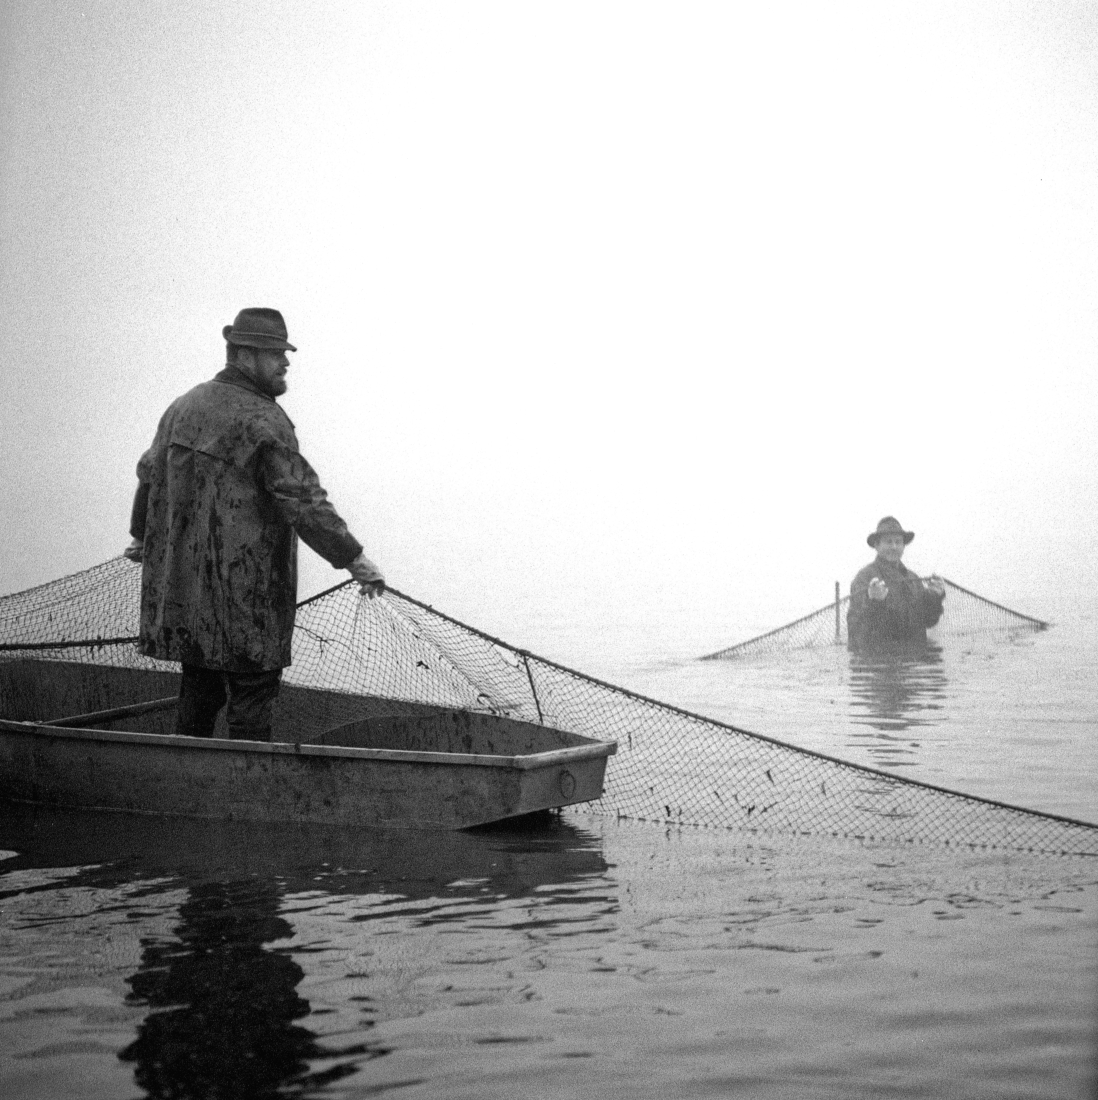 Traditional Bohemian fish harvesting